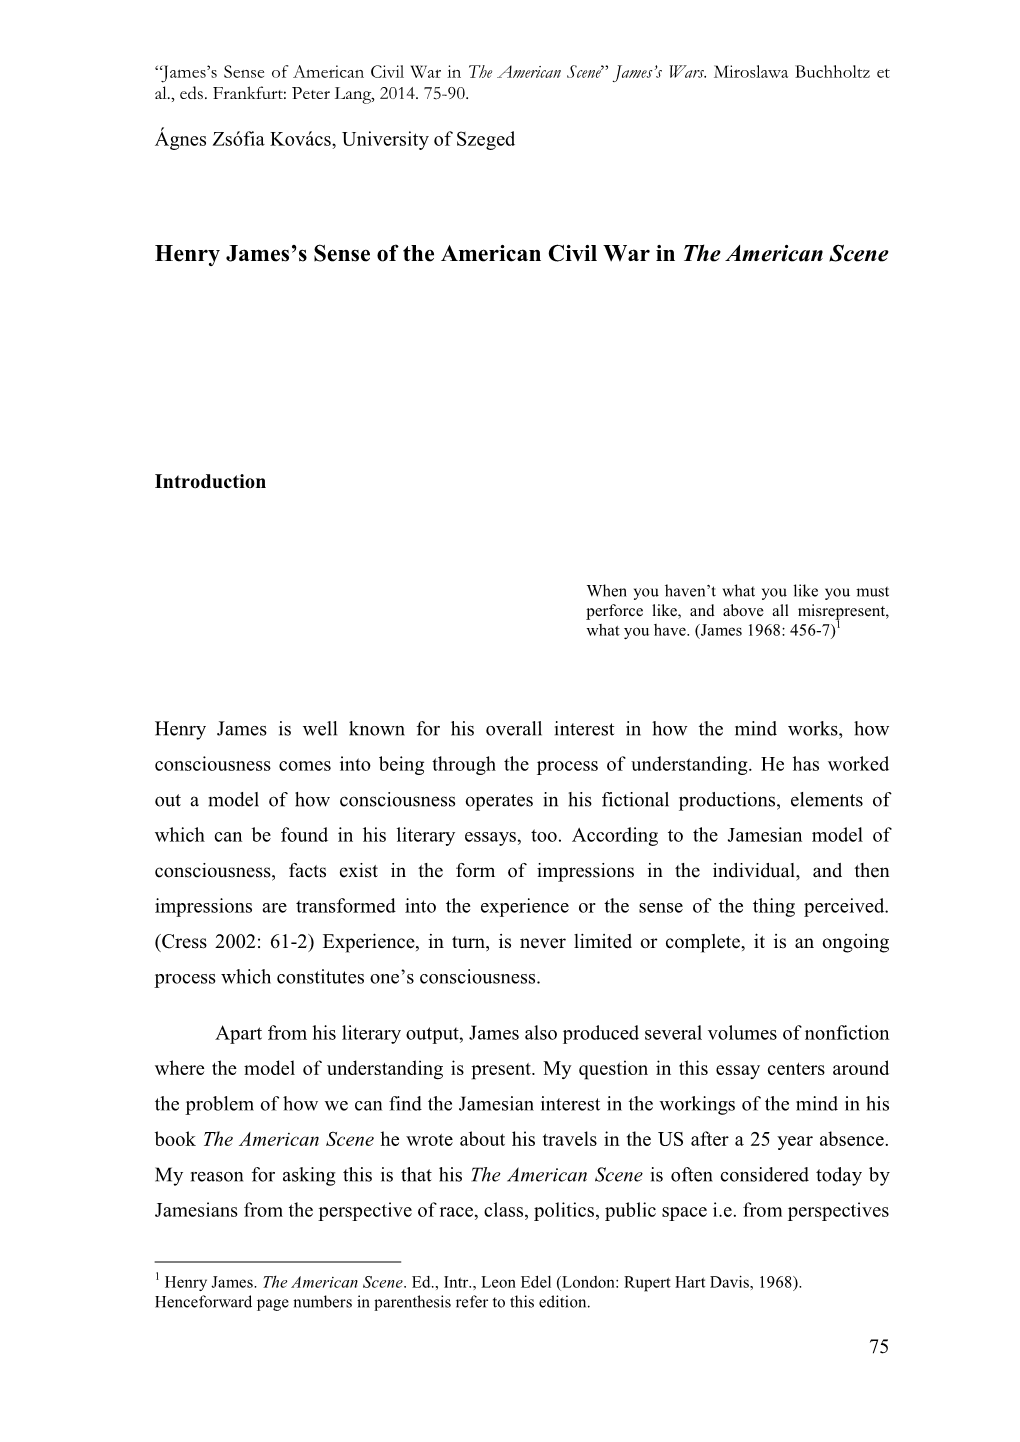 Henry James's Sense of the American Civil War in the American Scene